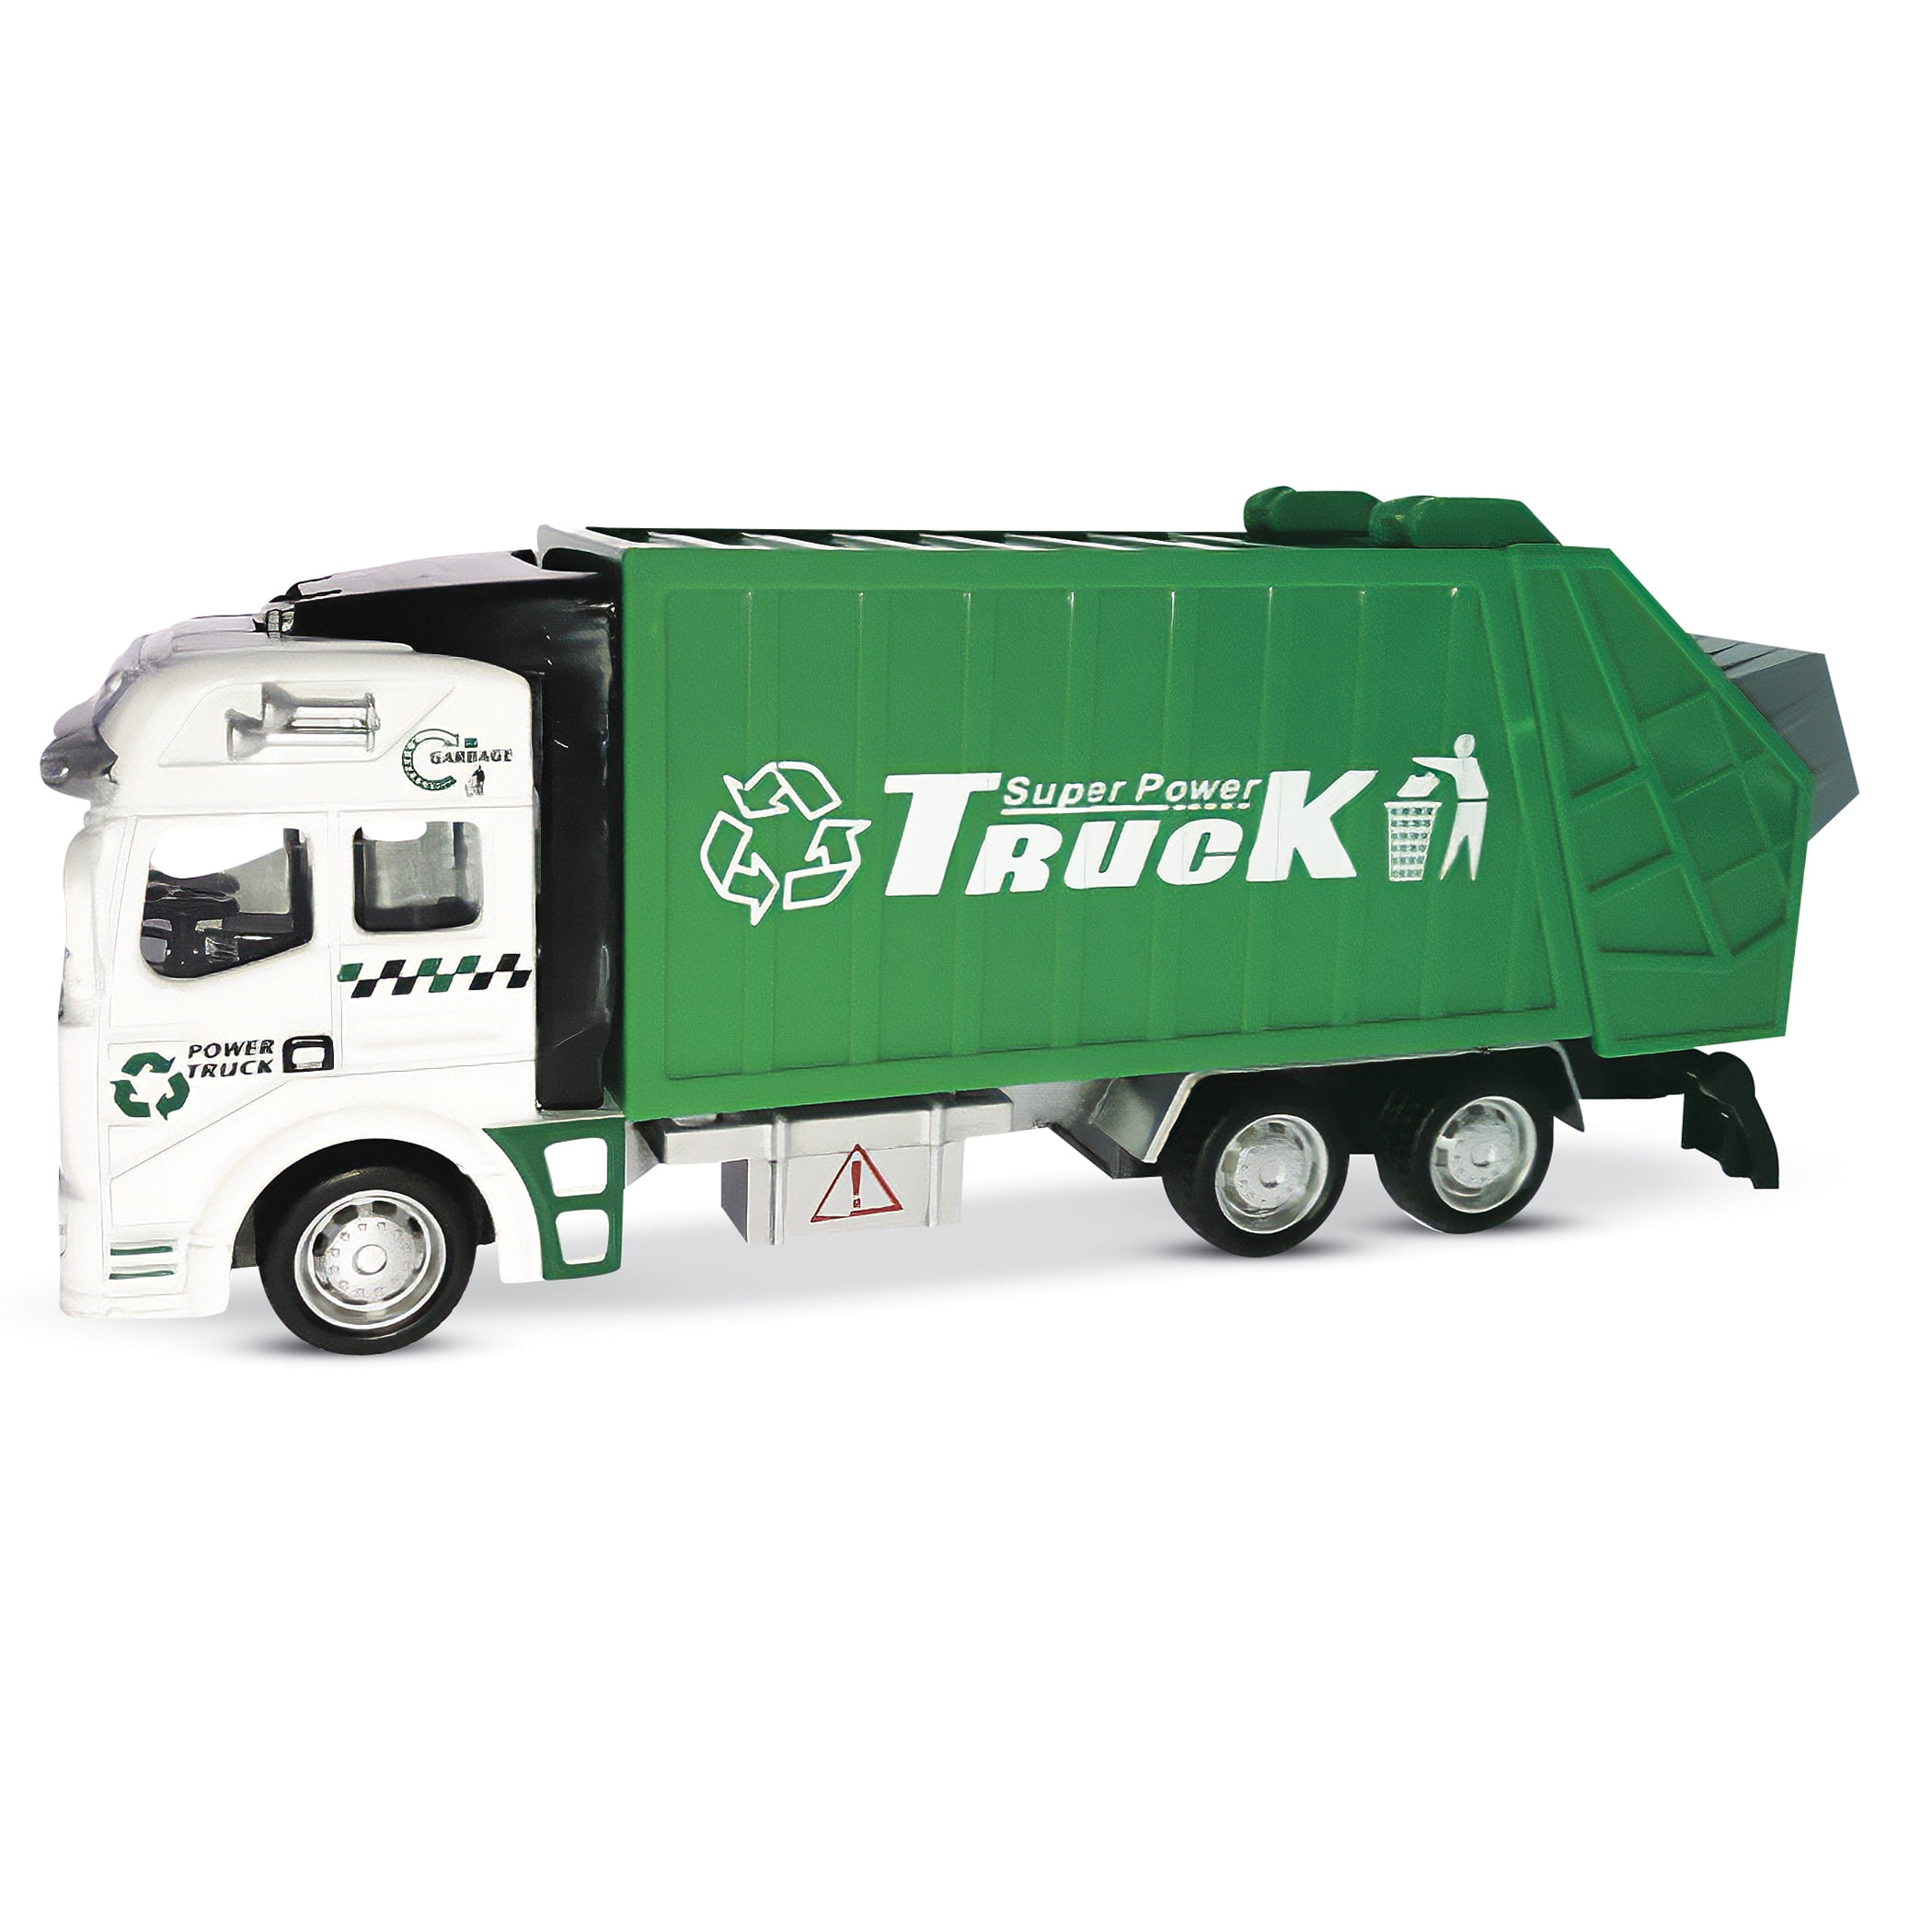 1:48 Garbage Truck w/ Trash Bin Model Car Diecast Toy Vehicle Pull Back Green